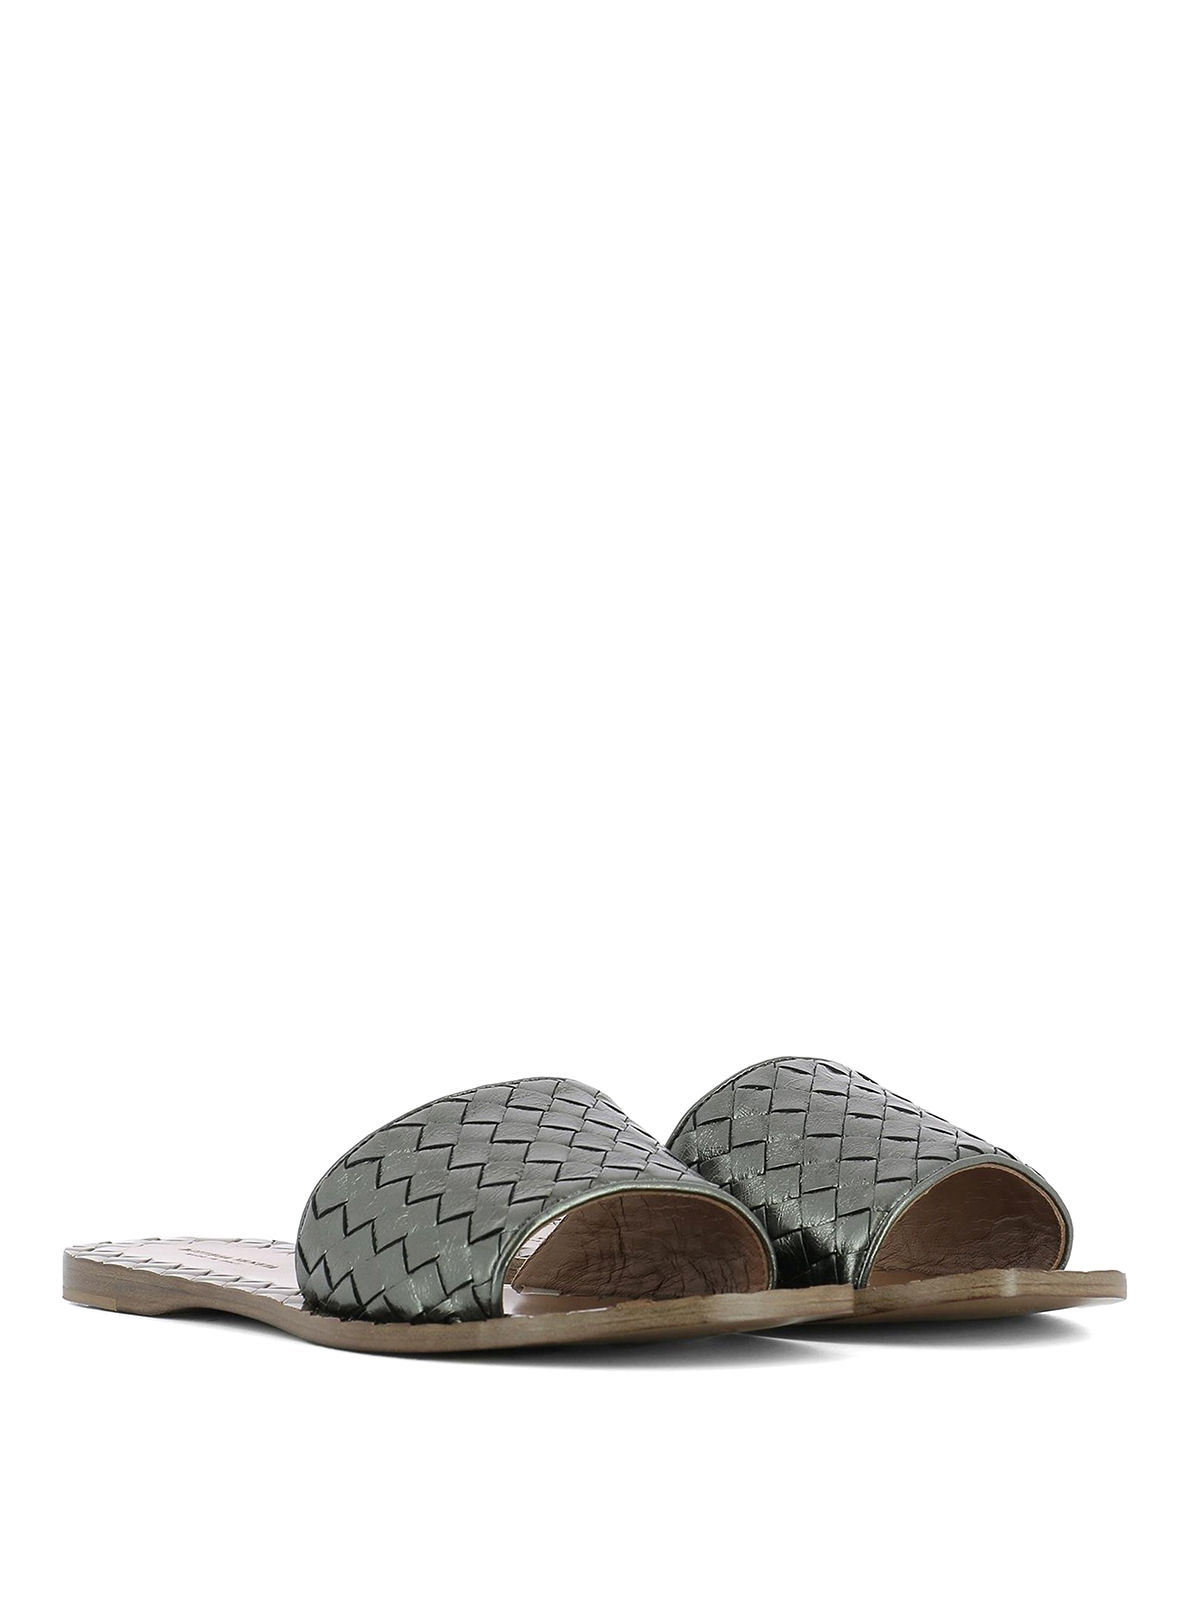 Buy Silver Flat Sandals for Women by Walkway Online | Ajio.com